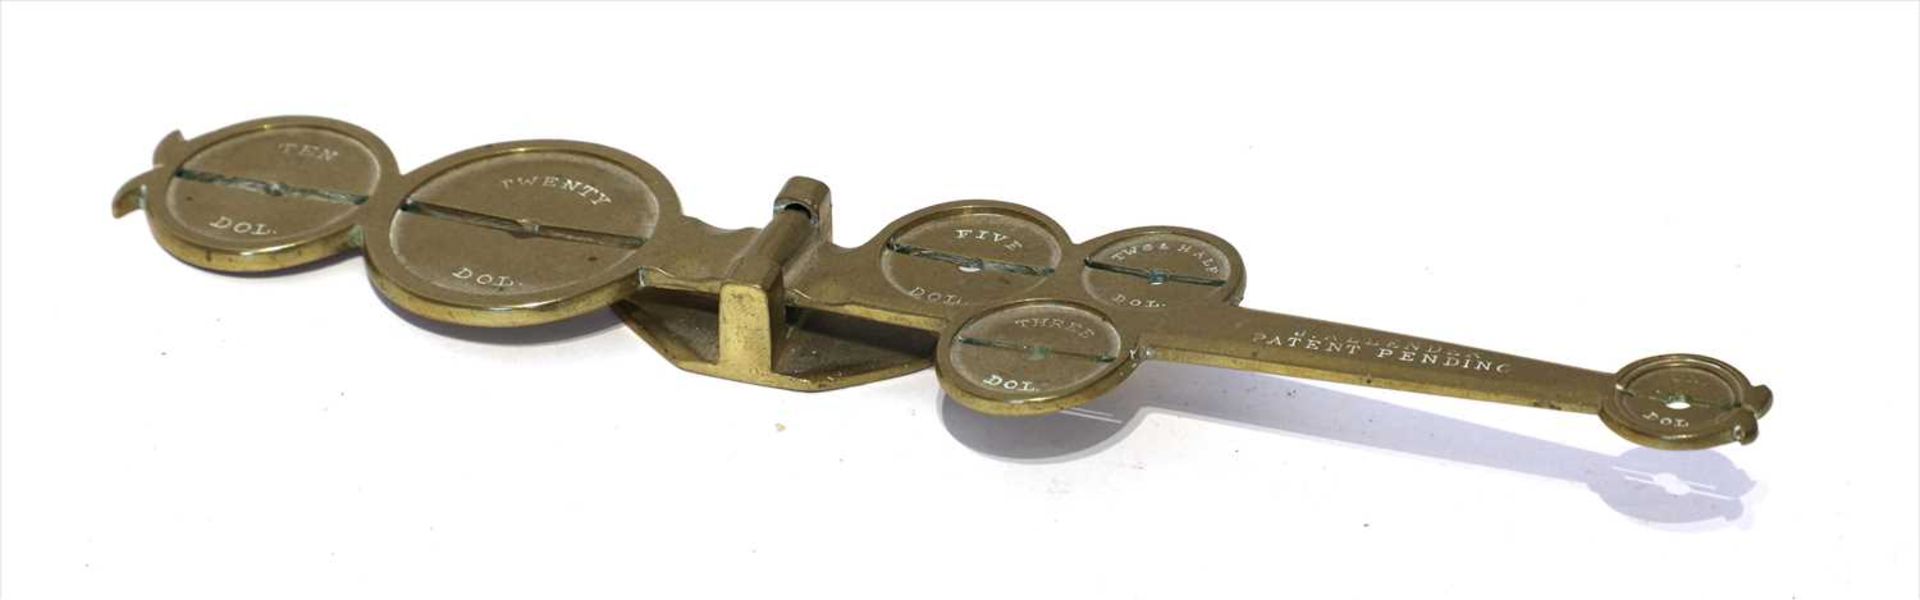 A brass counterfeit coin detector,